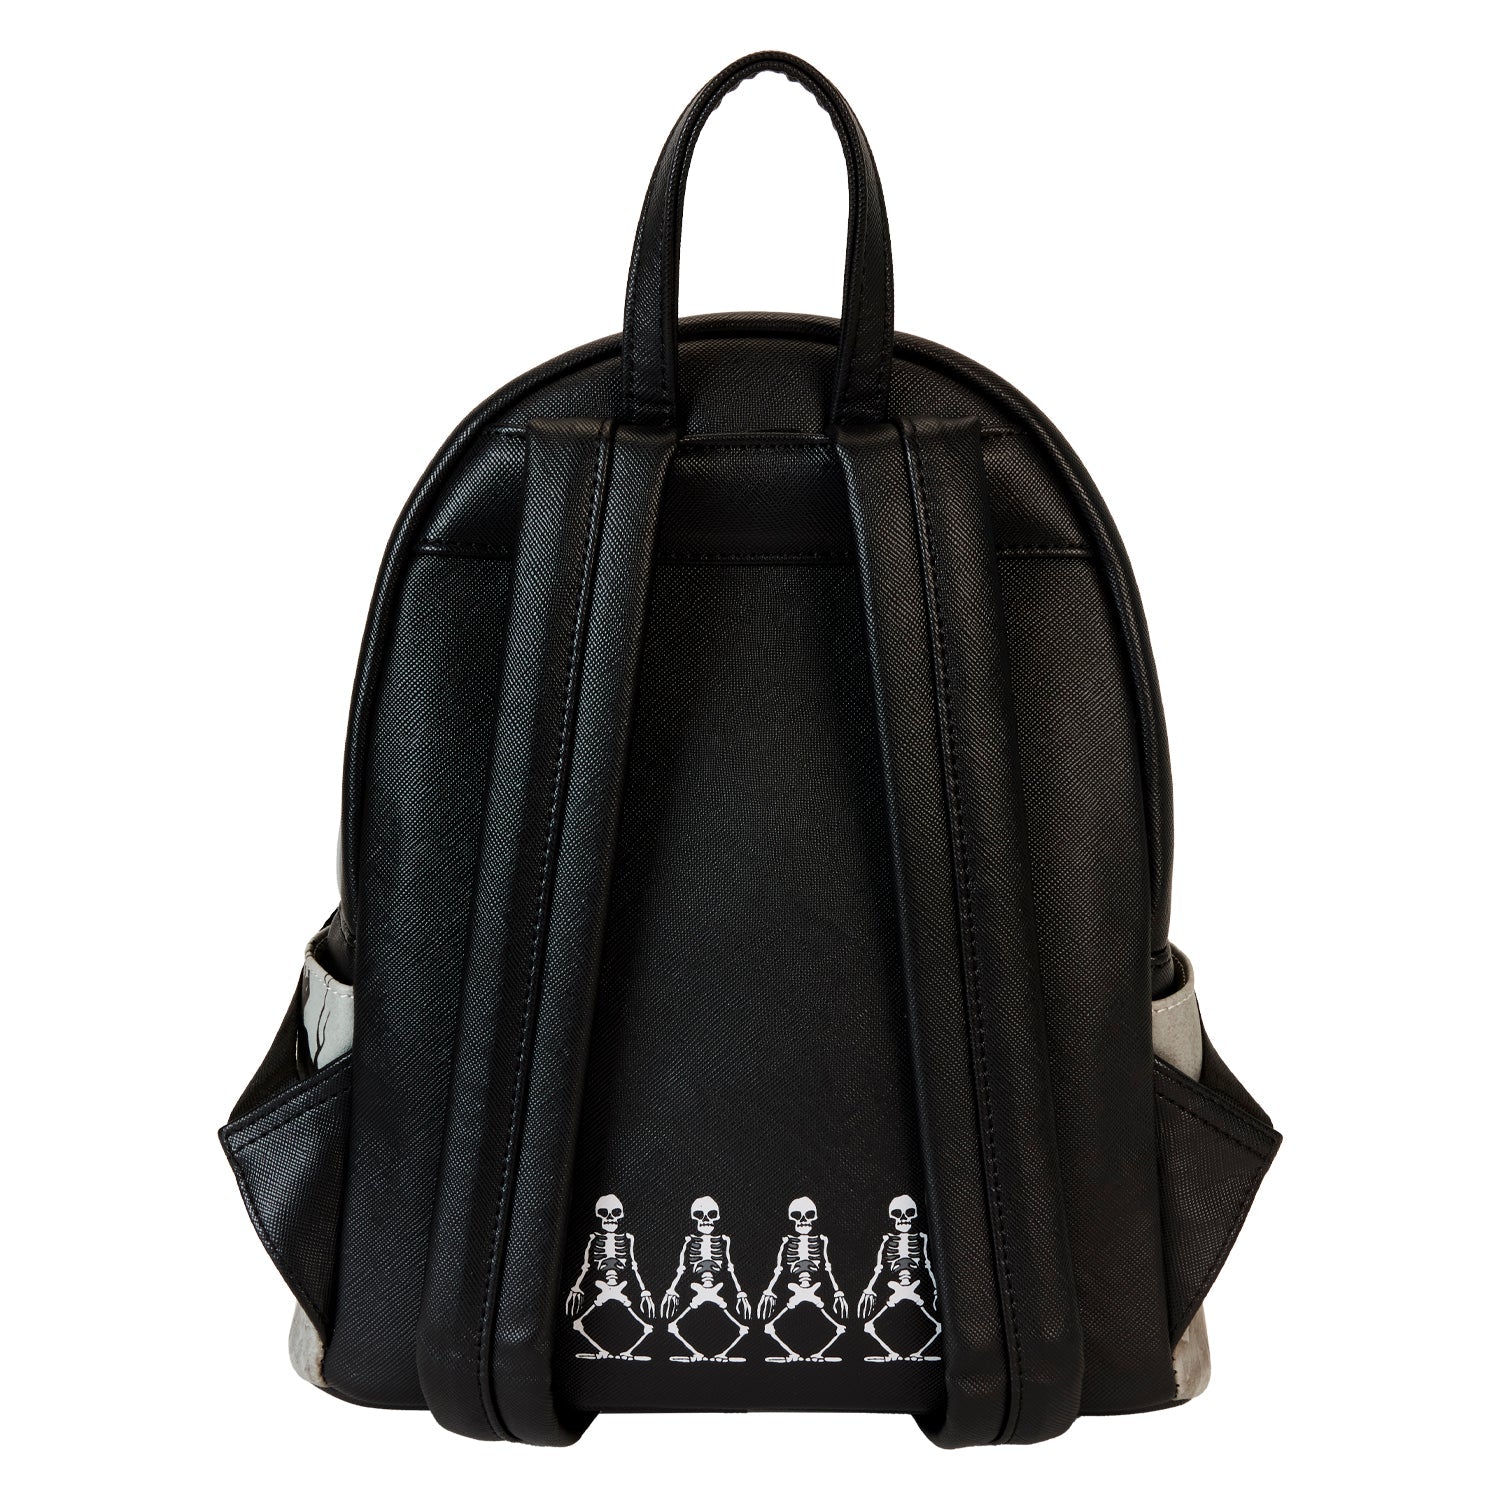 Loungefly x Disney Skeleton Dance Mini Backpack - GeekCore